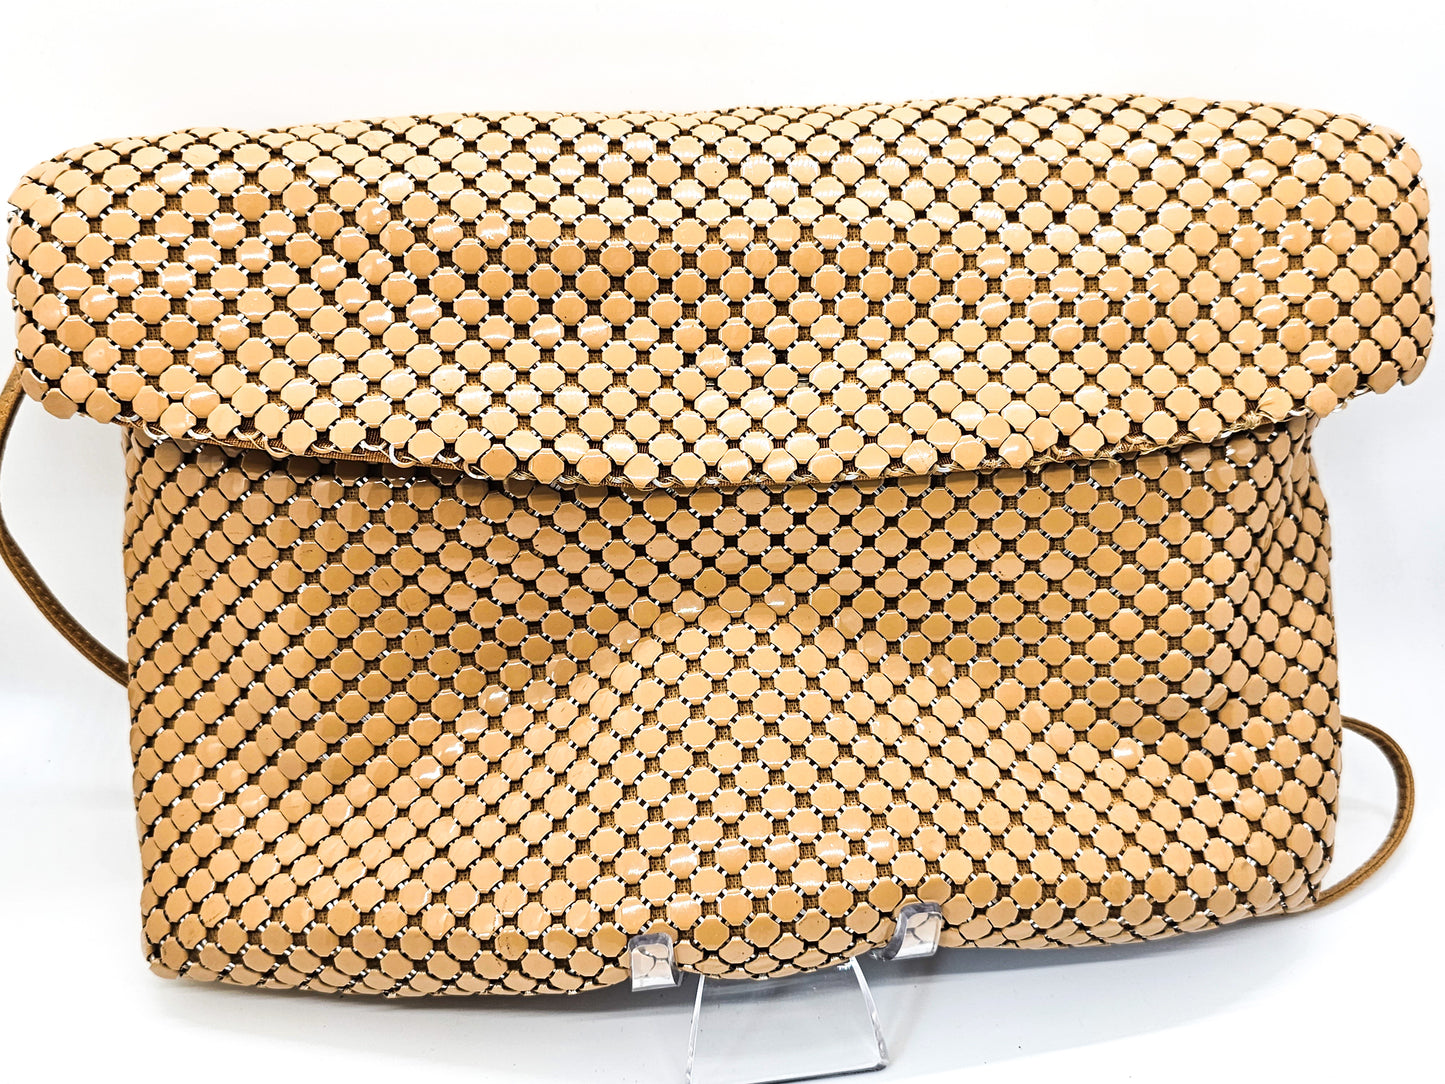 Whiting and Davis nude natural enamel metal mesh vintage purse